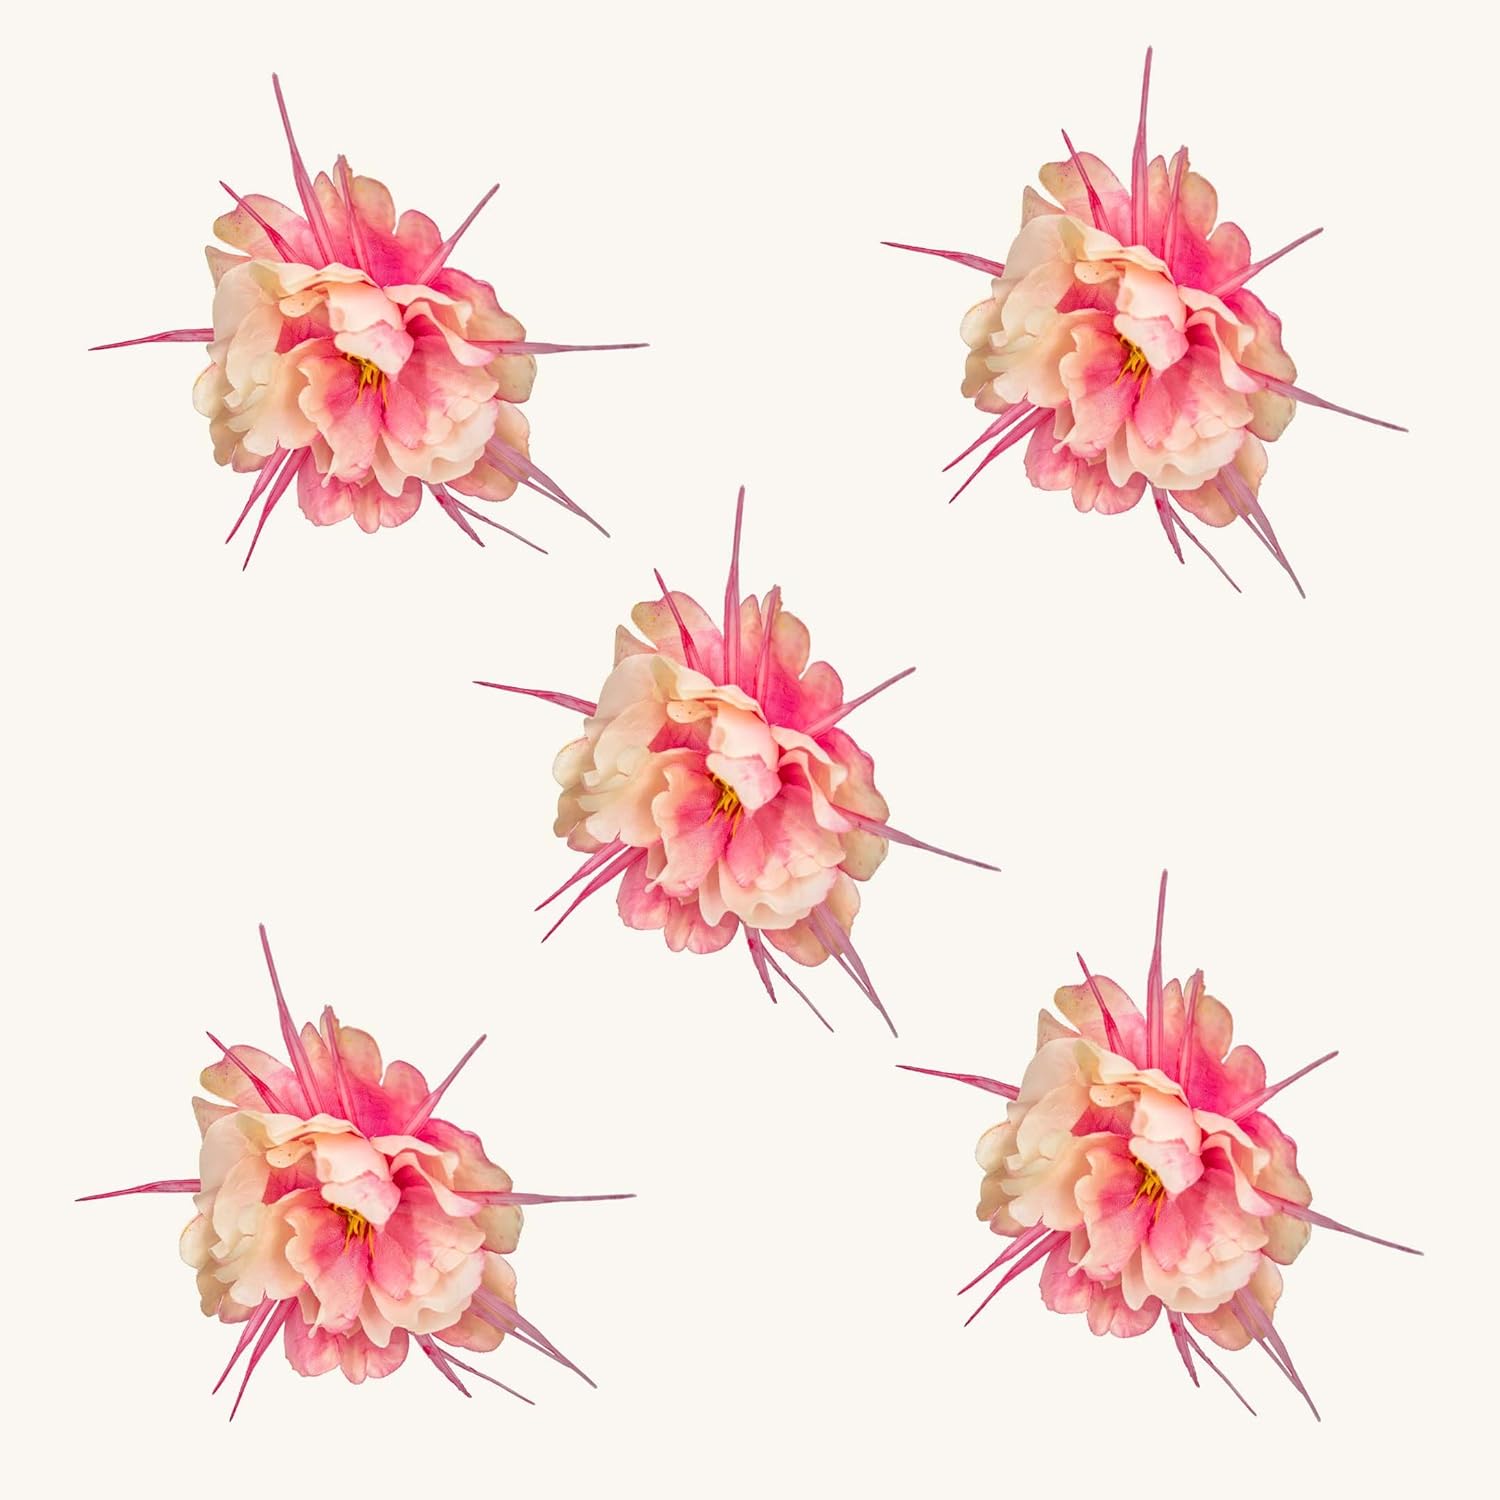 Aesthetic Pink Rose Flower Decoration Kit